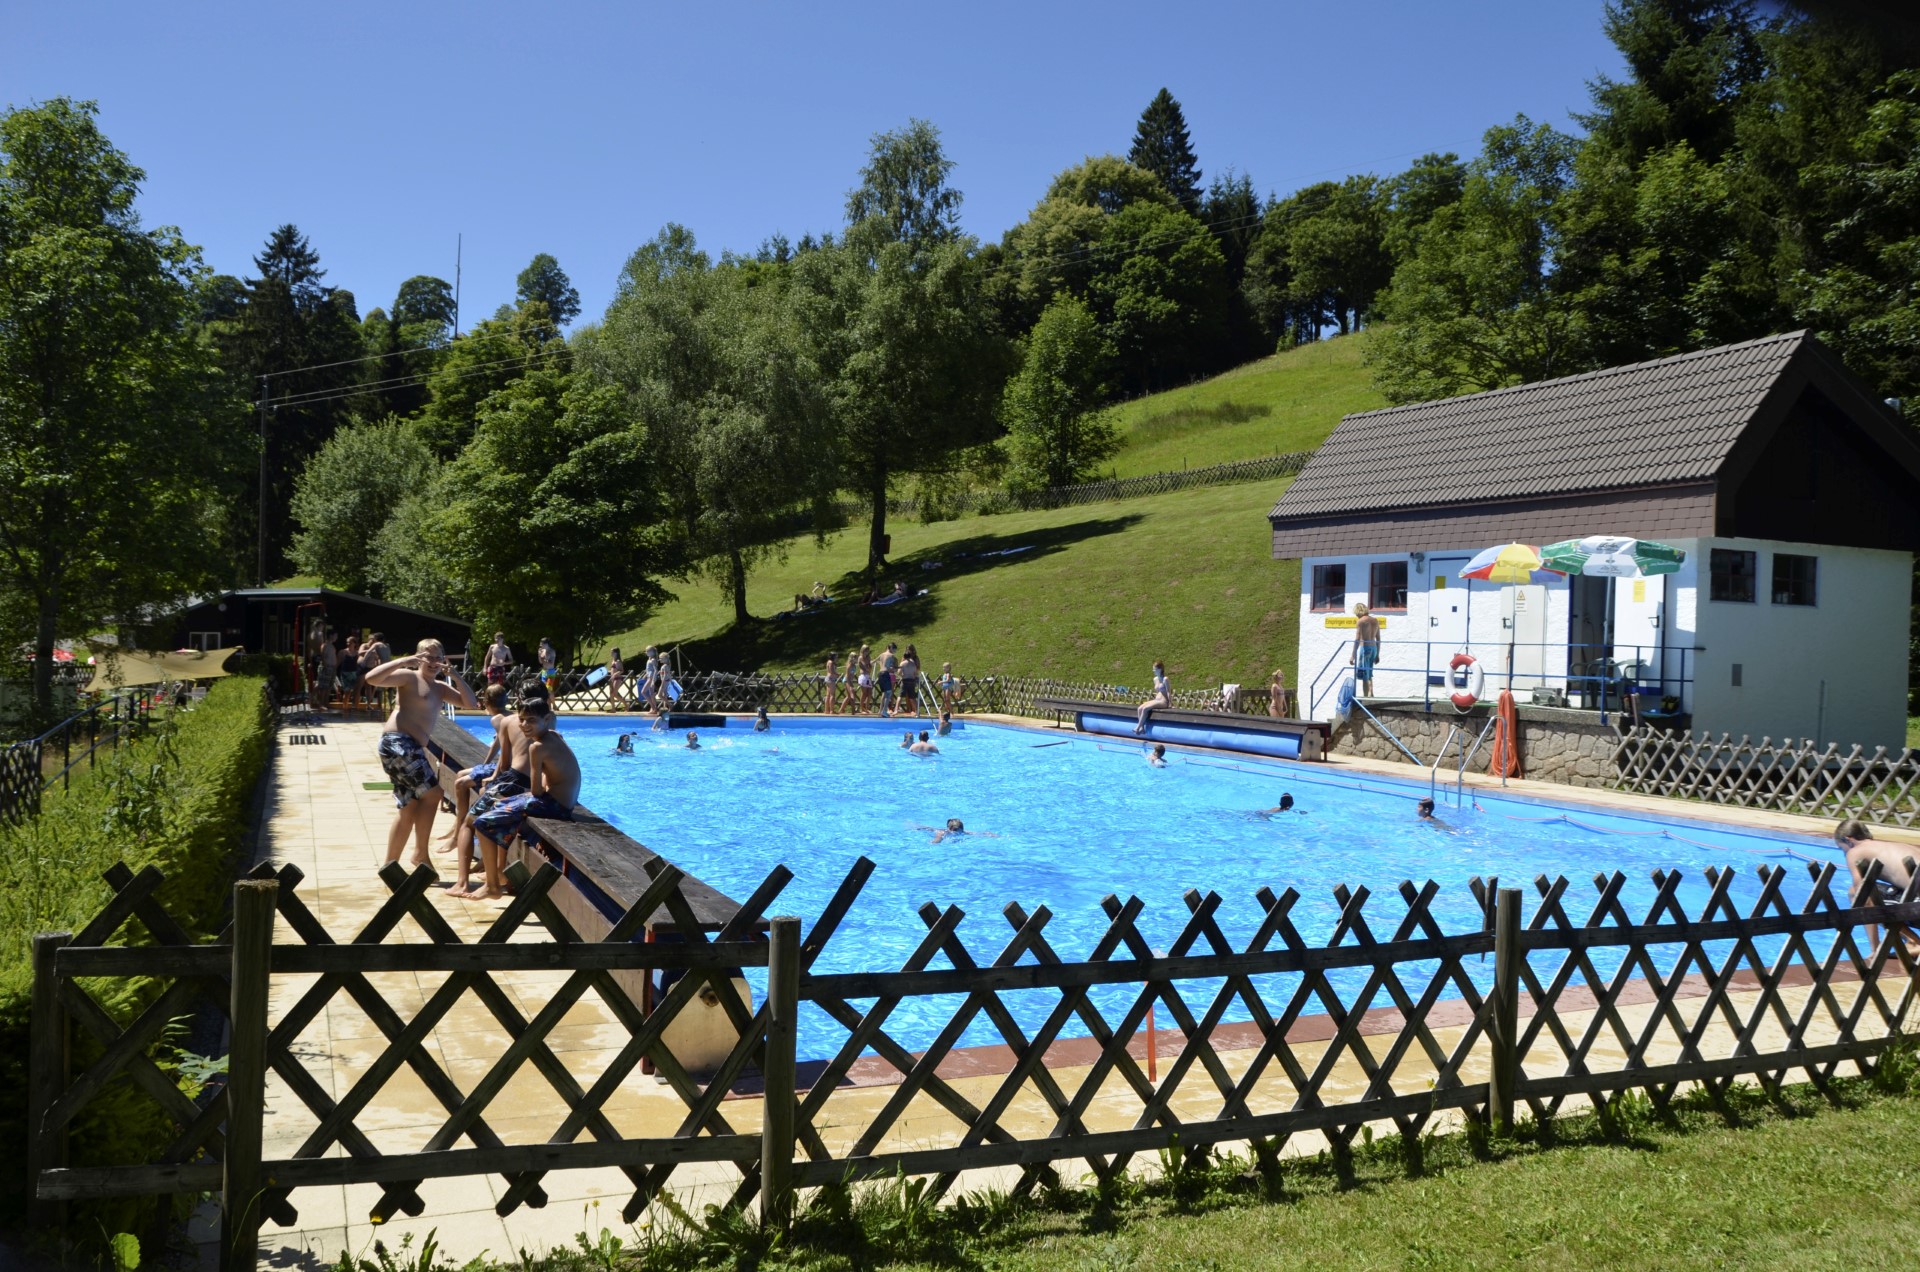 Schwimmbad in Todtnauberg. Foto: Bergwelt Todtnau 